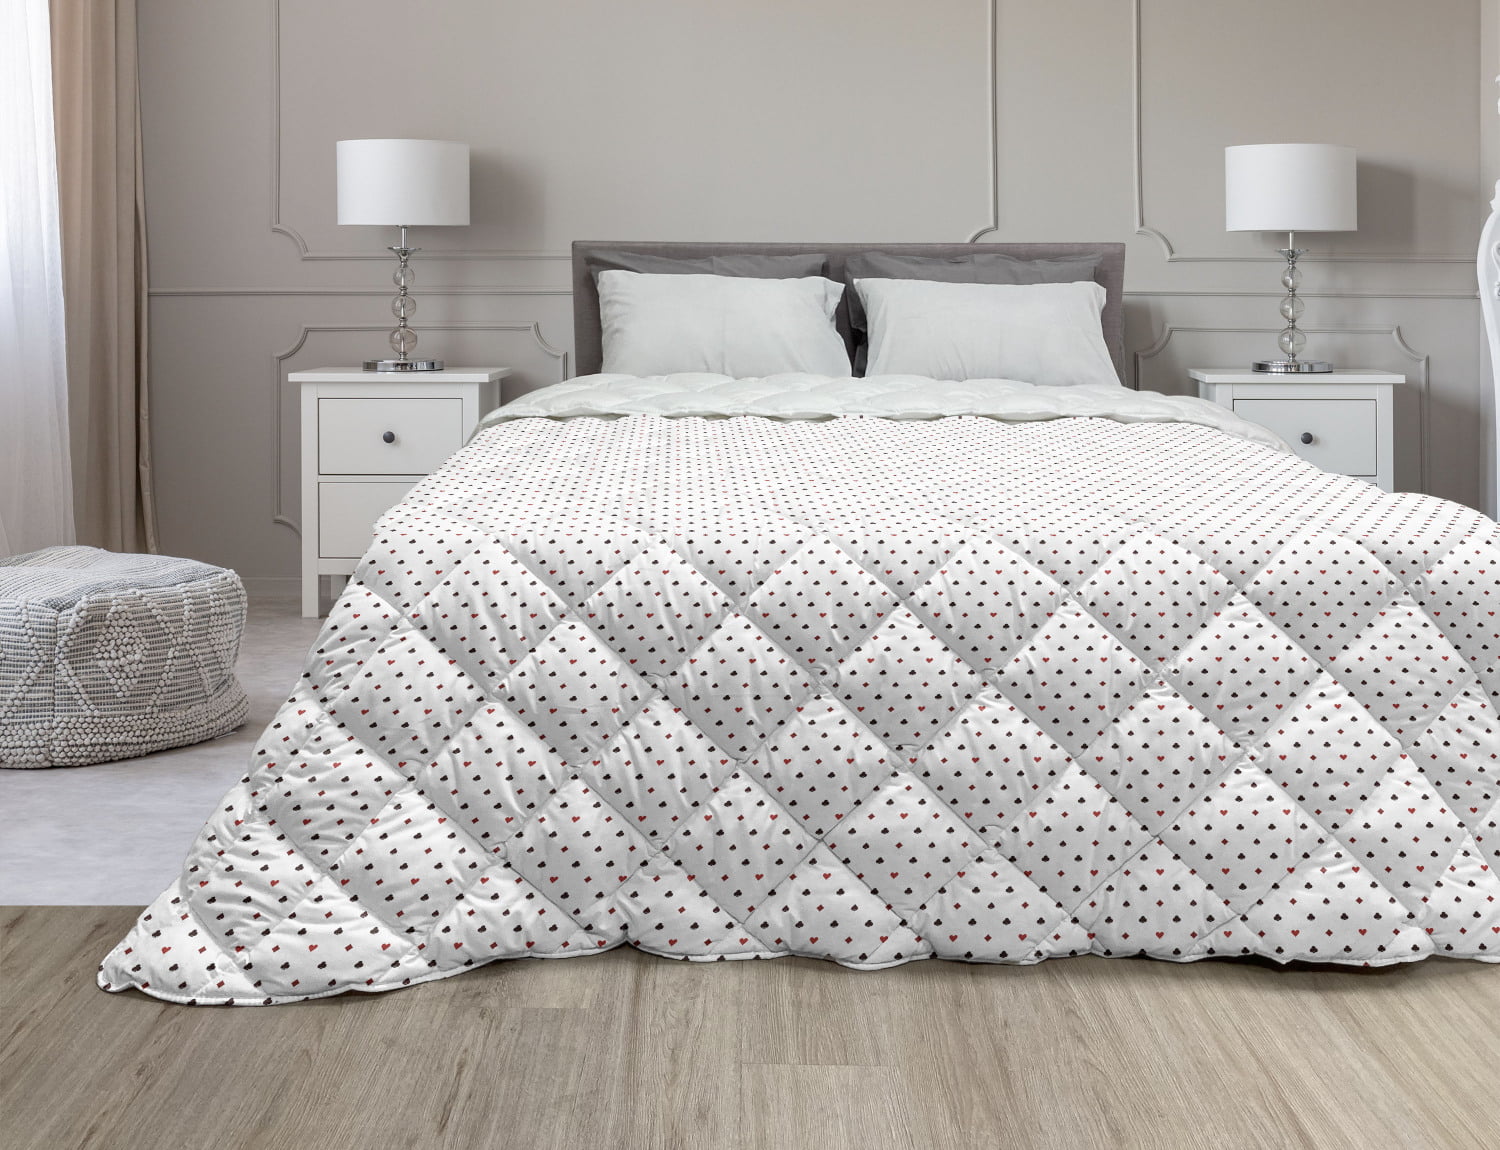 100% Microfiber Charcoal Linen Textured Printing Down Alternative Comforter Set 